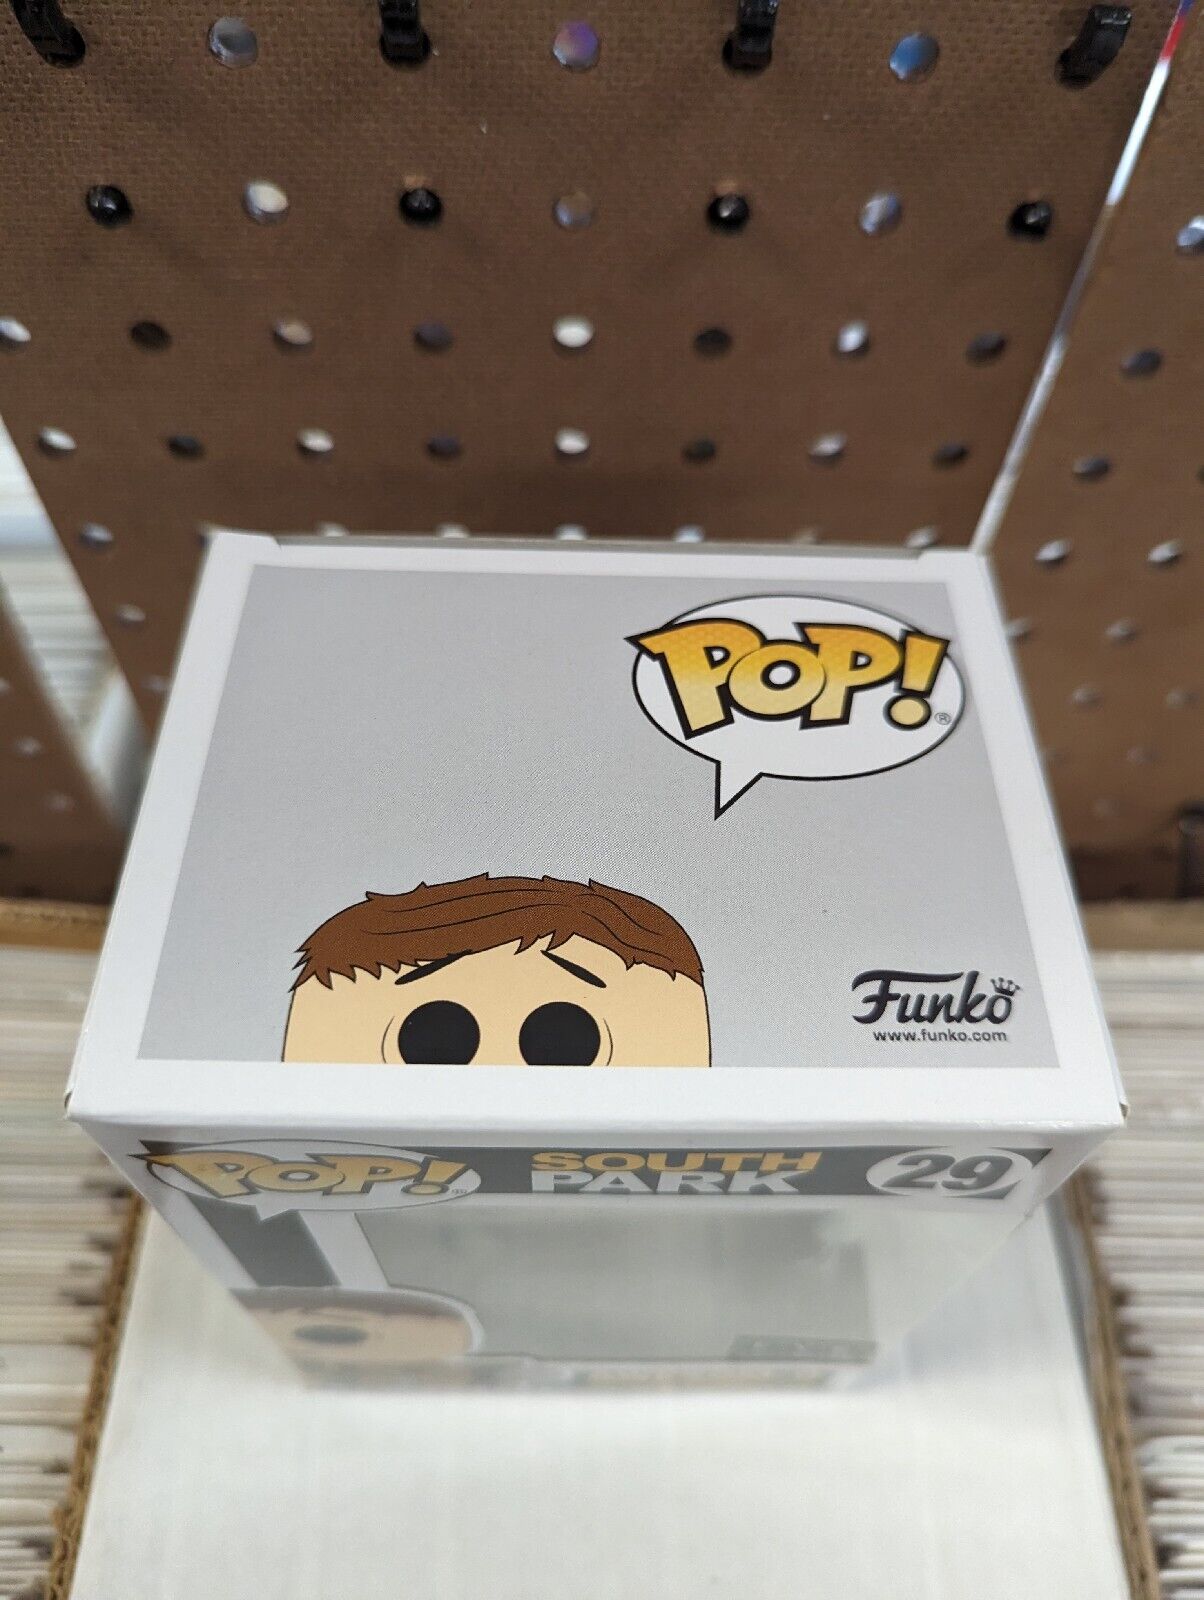 Funko Pop Awesom-o 29 FYE Exclusive South Park